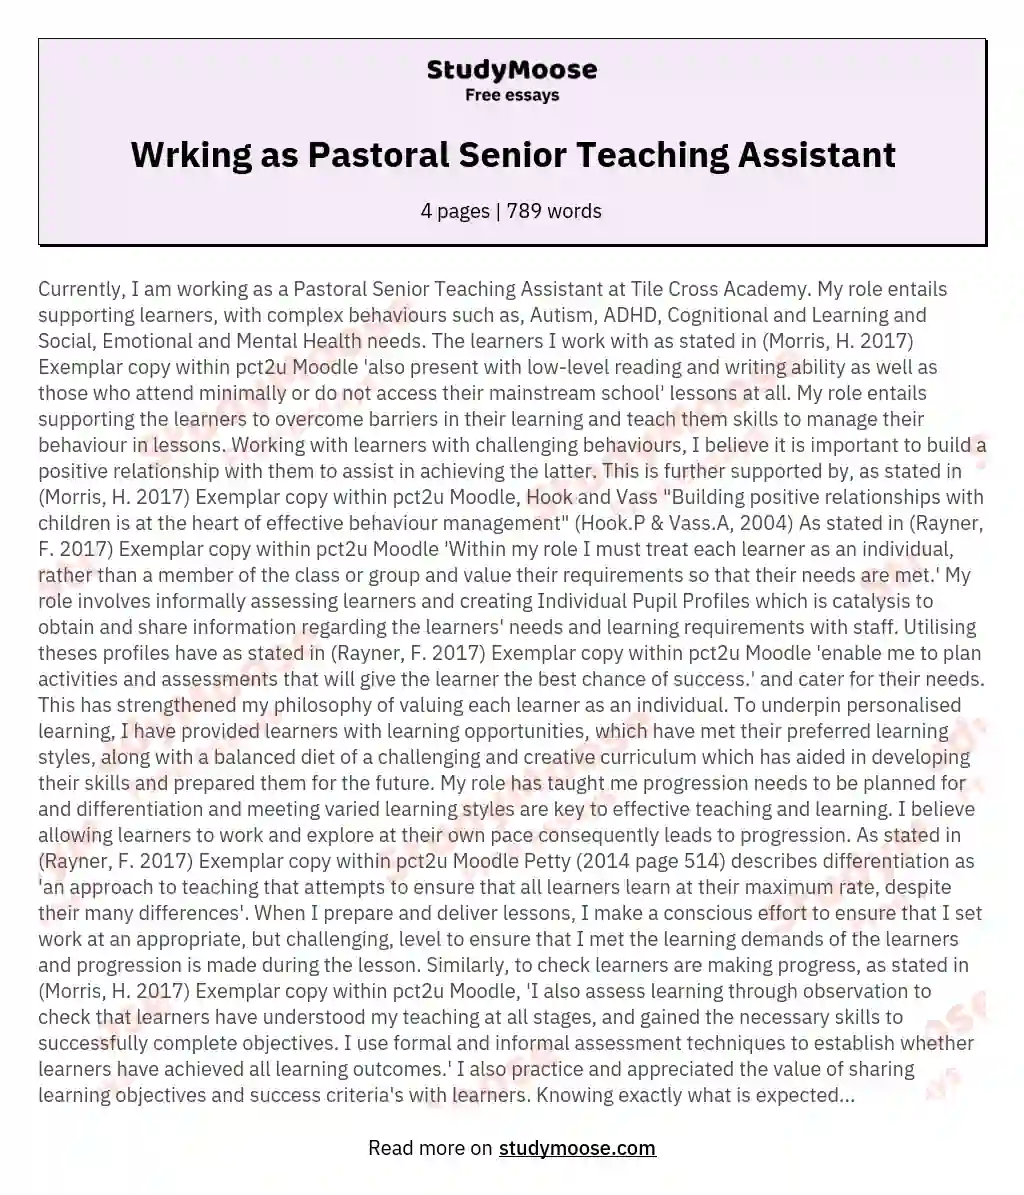 Wrking as Pastoral Senior Teaching Assistant essay